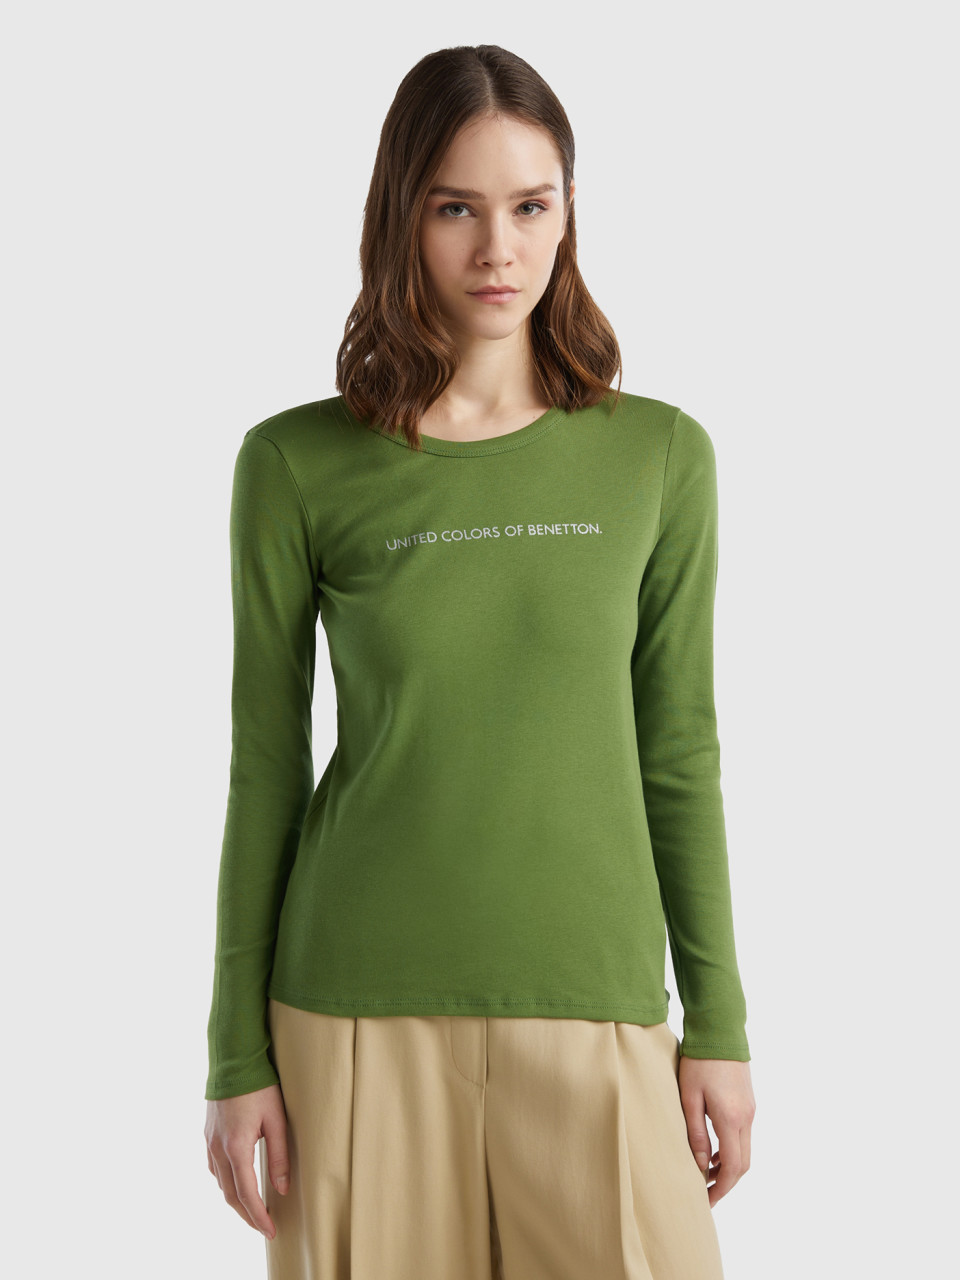 Benetton, Camiseta De Manga Larga De 100 % Algodón Verde Militar, Militar, Mujer